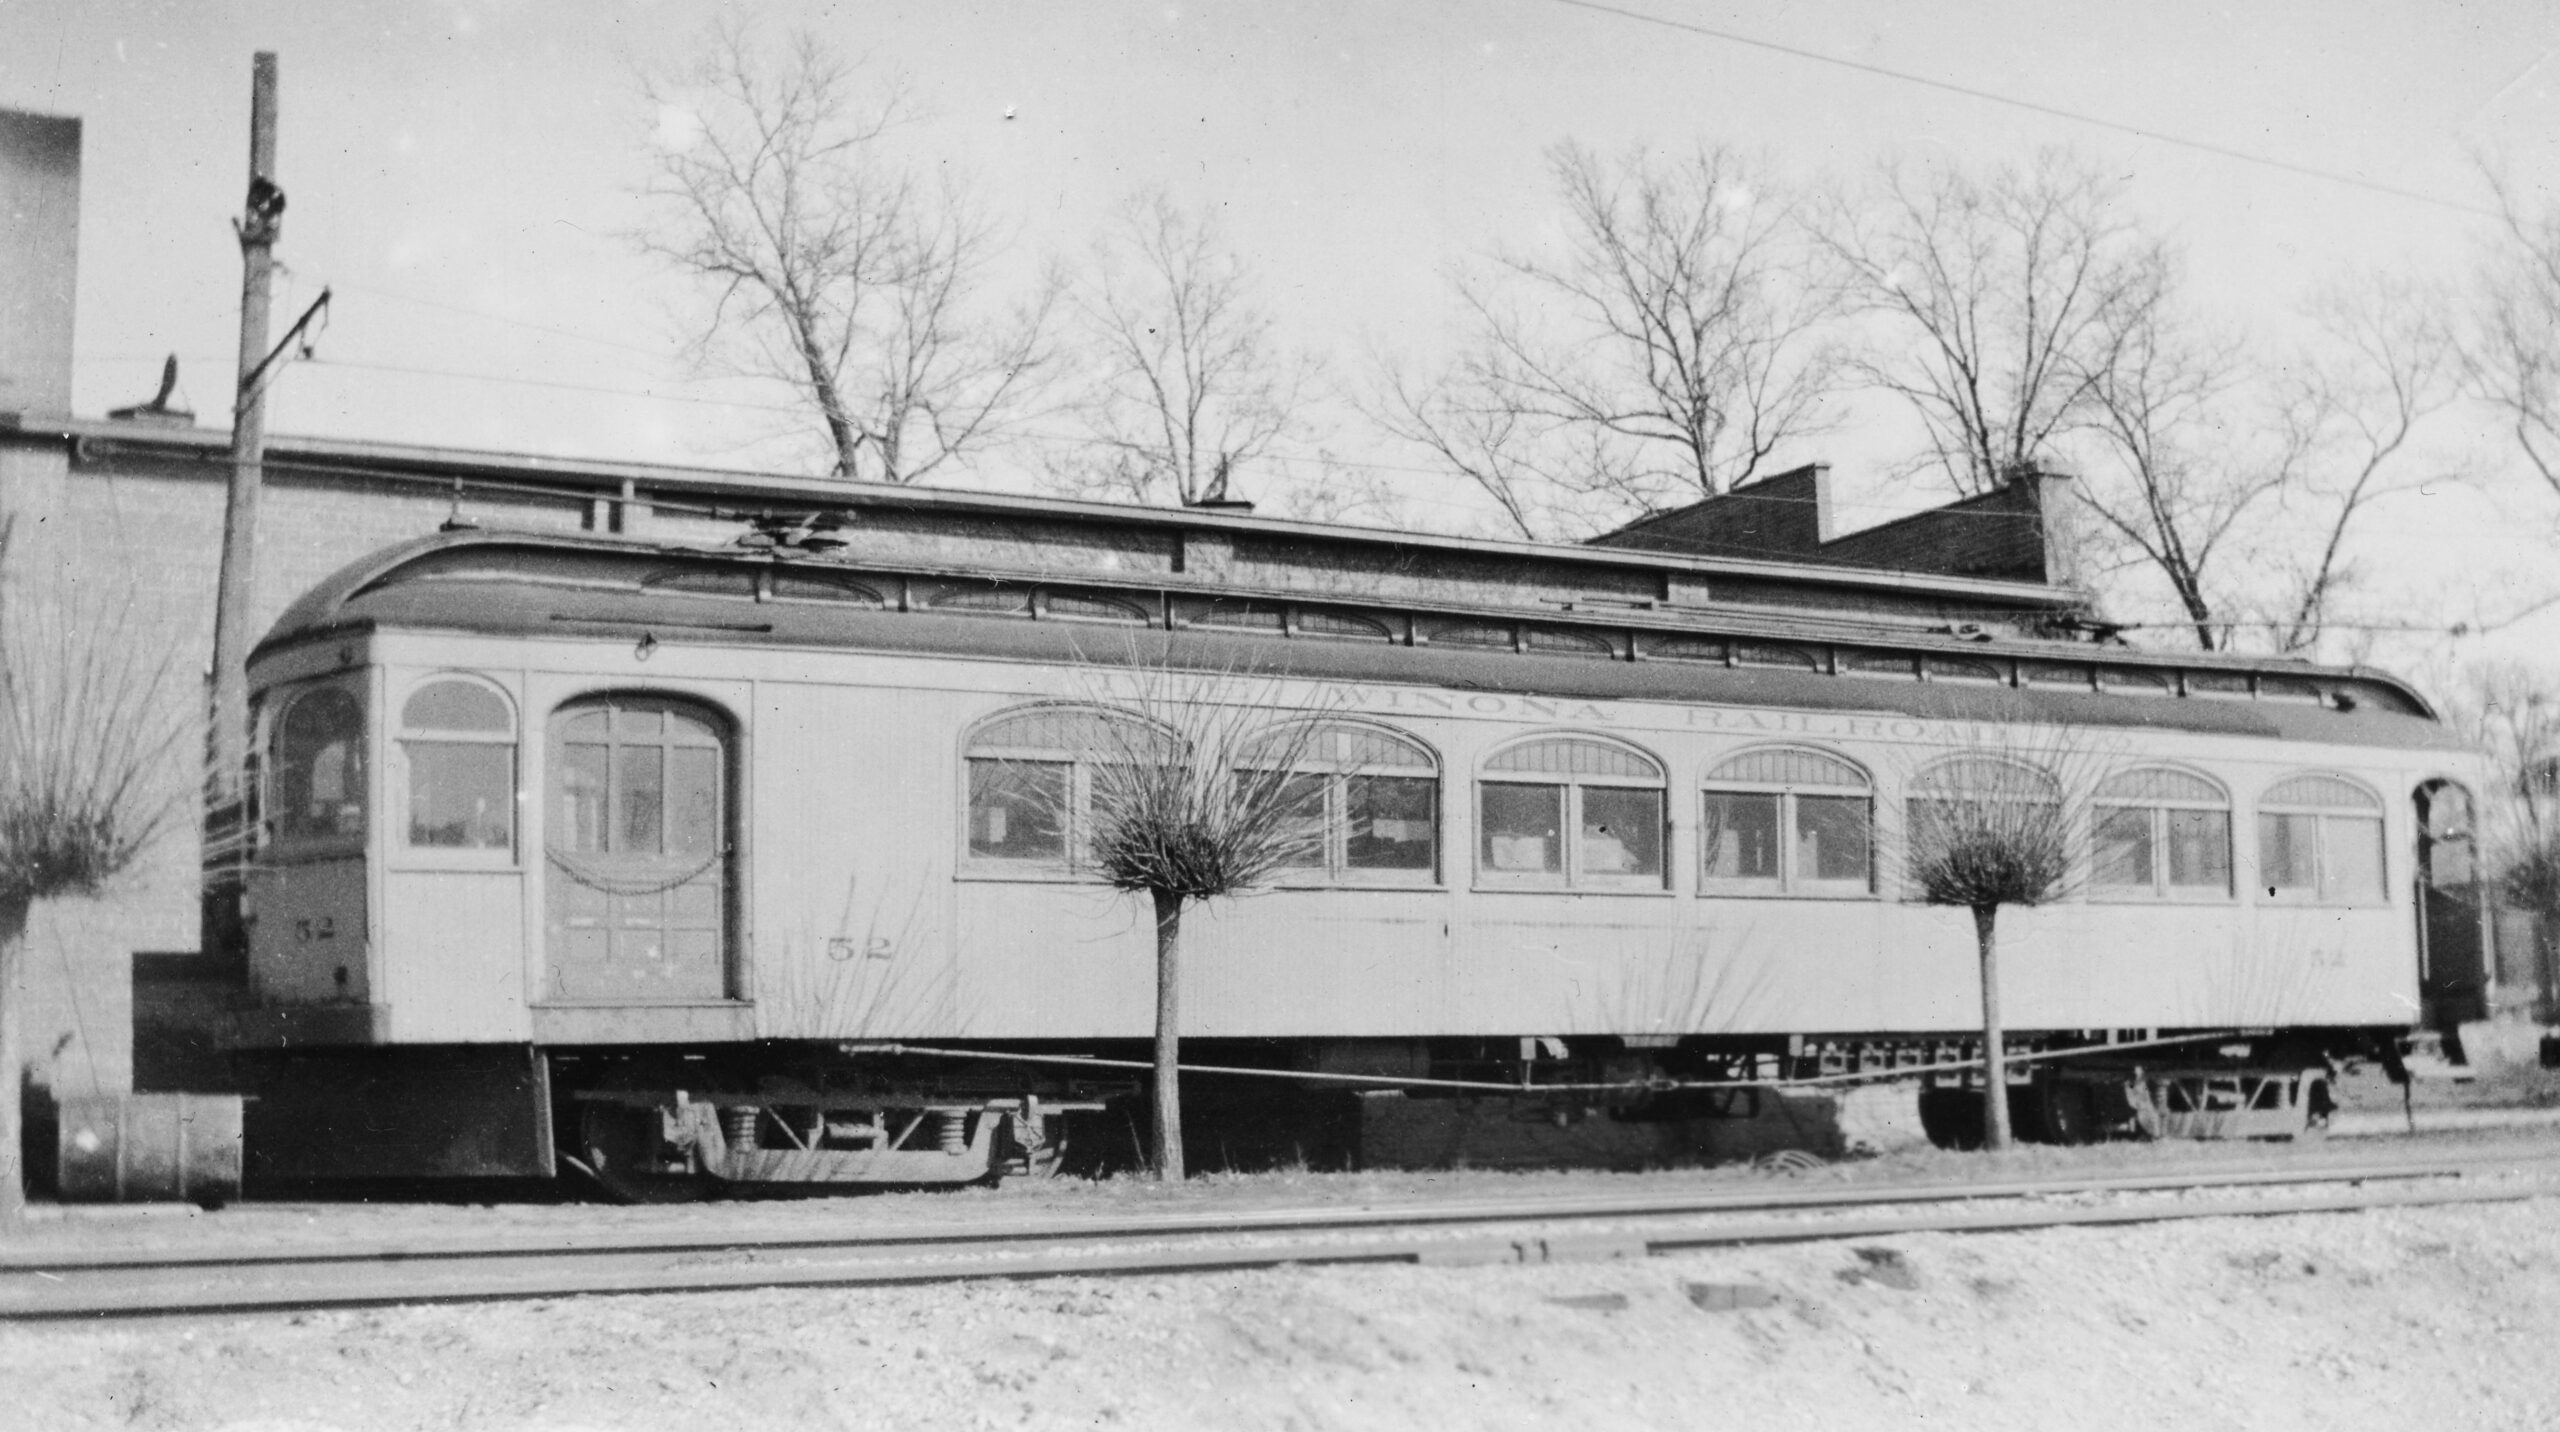 Winona Railroad | Warsaw, Indiana | Jewett car #52 | April 1934 | Elmer Kremkow Collection